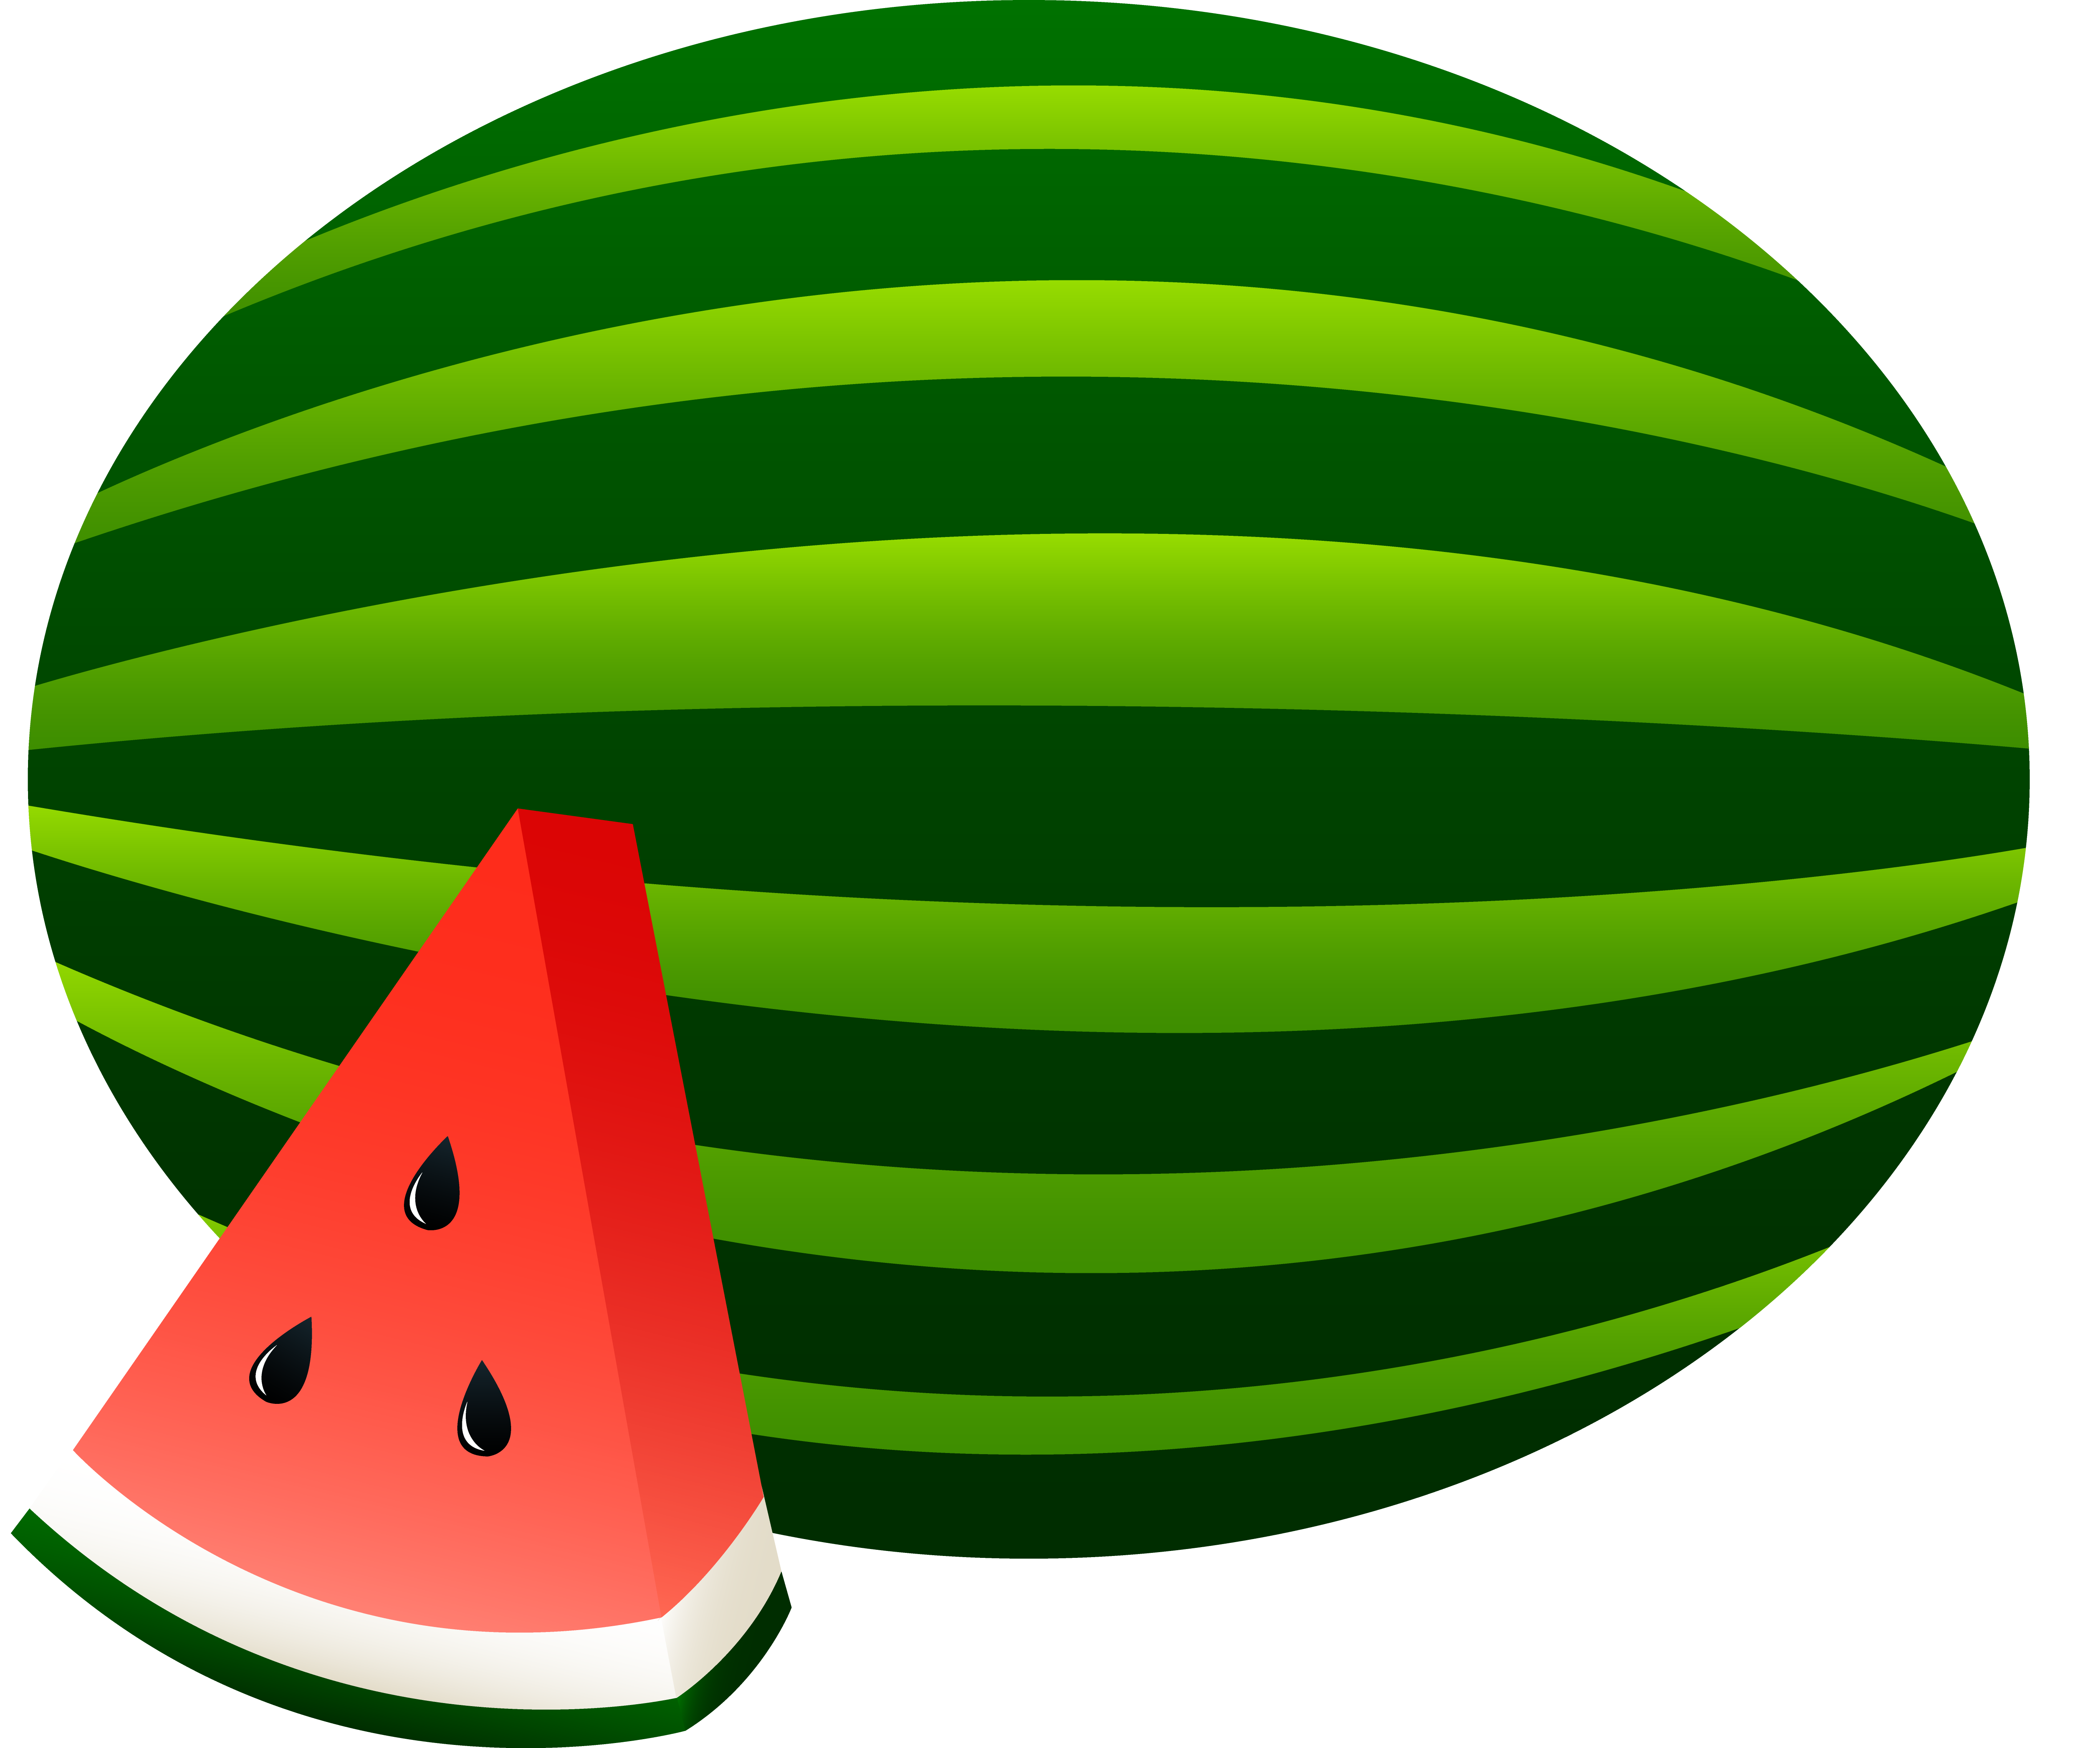 Watermelon Slice Clipart Black And White - Free ...